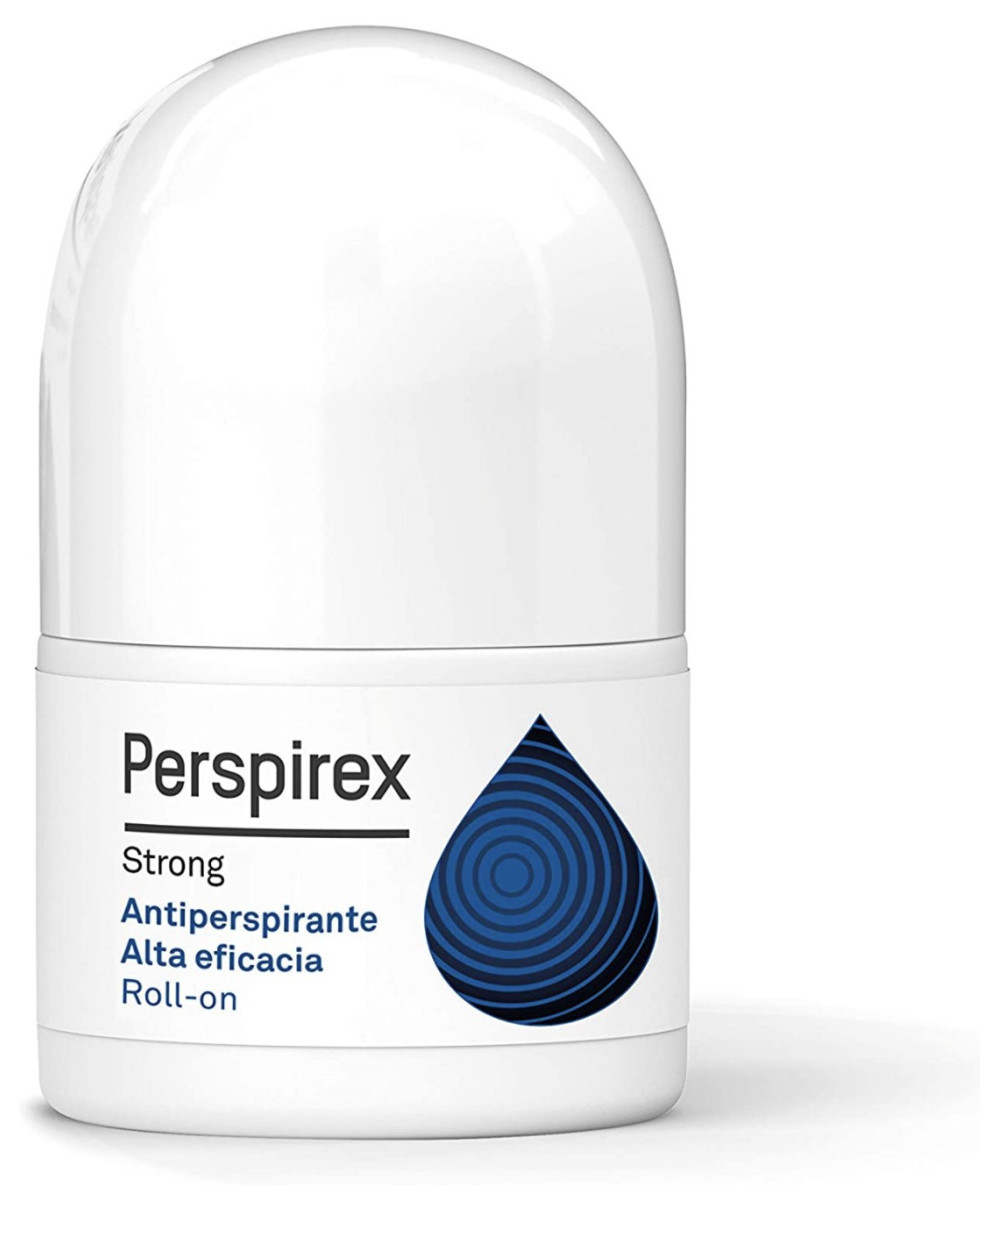 Perspirex Strong Antiperspirante Desodorante Roll-on